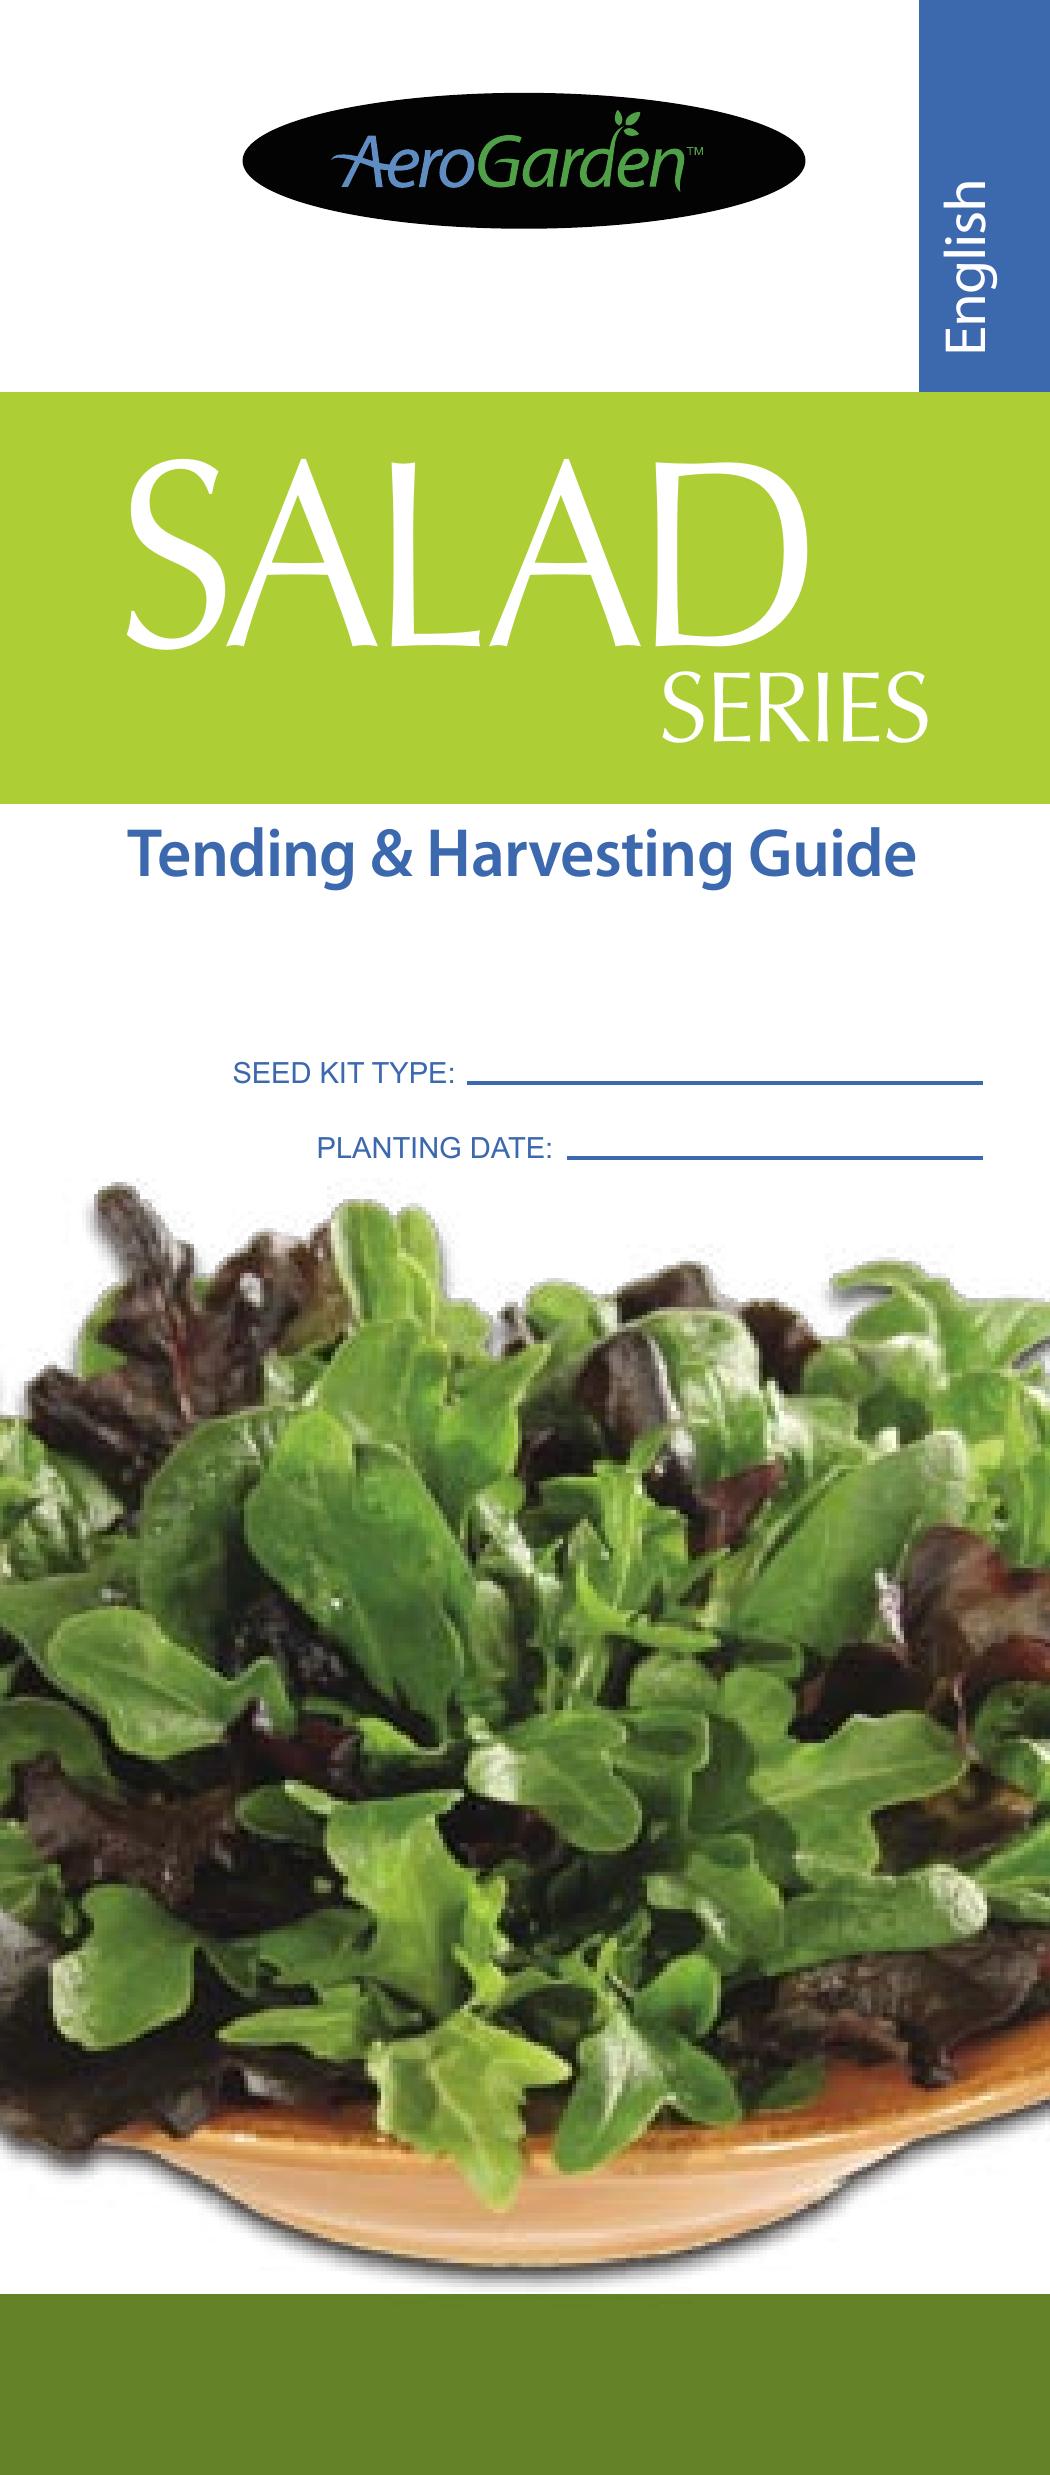 AeroGarden Salad Series Greenhouse Kit User Manual